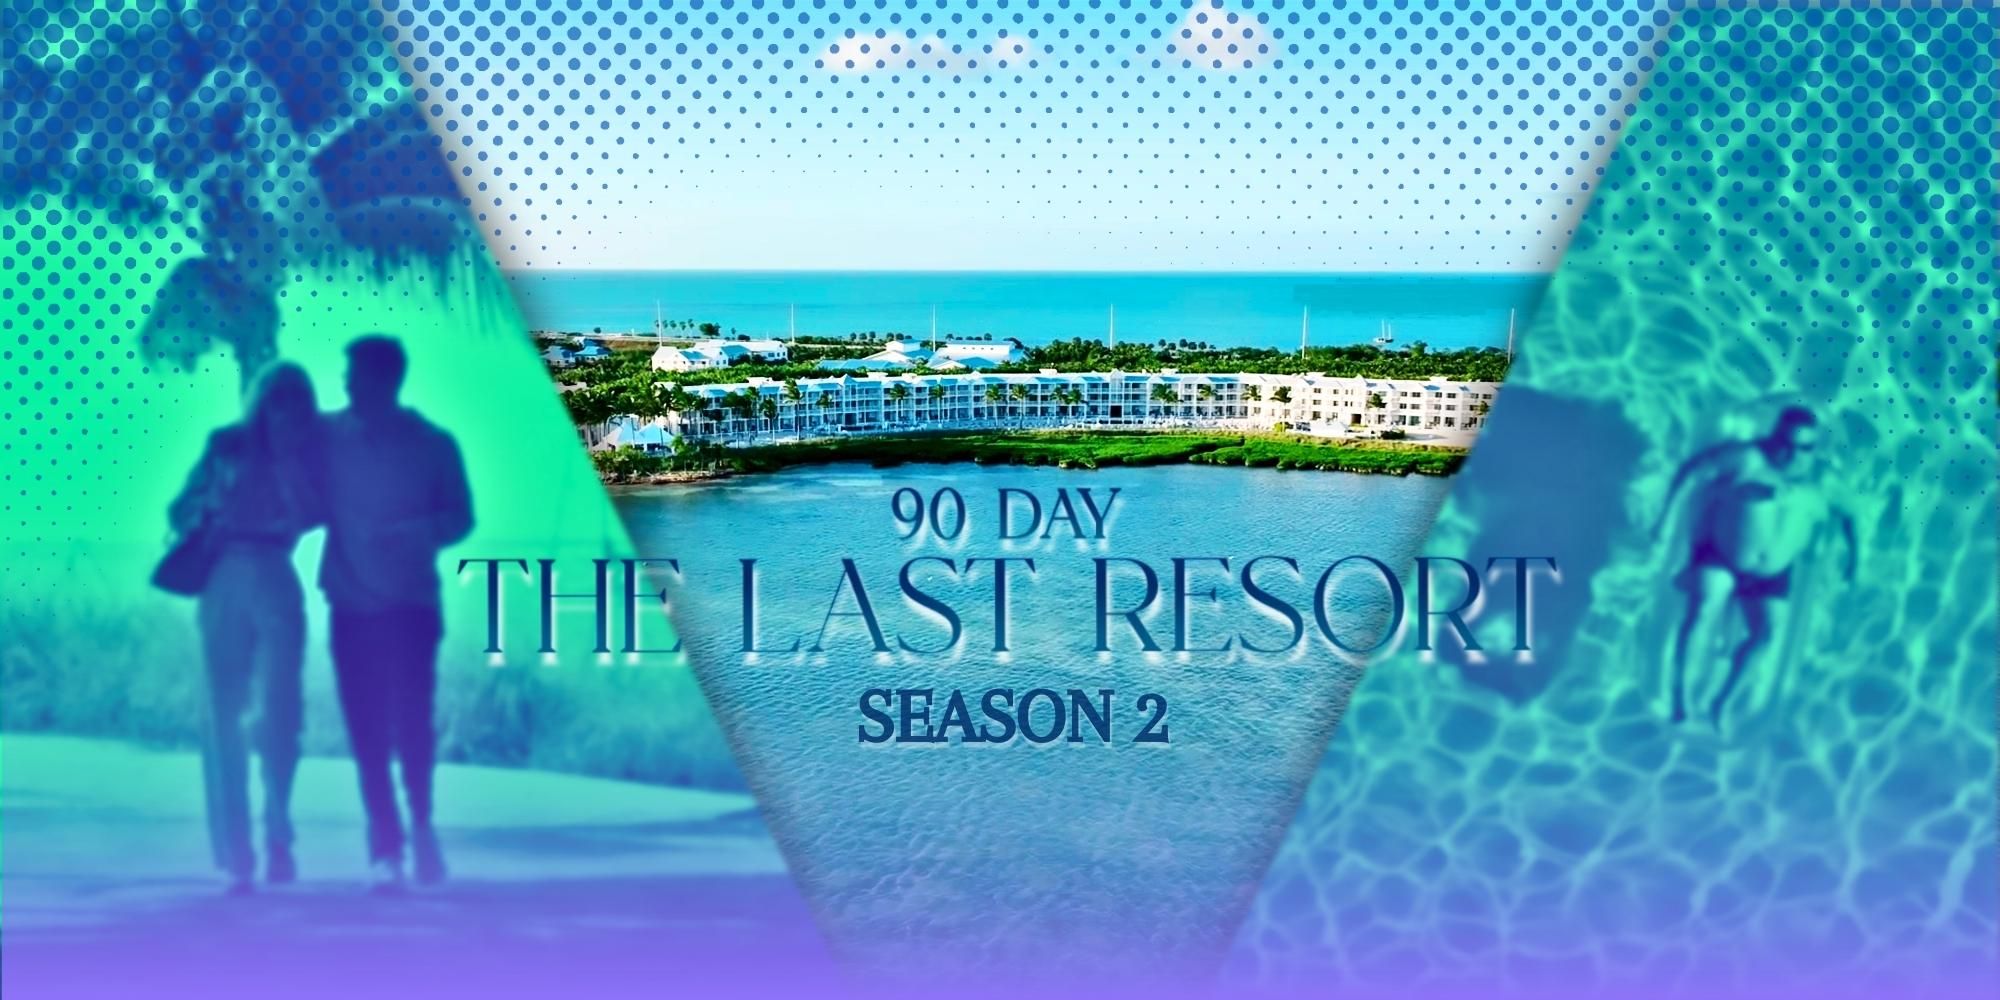 90 Day The Last Resort Season 2 promo